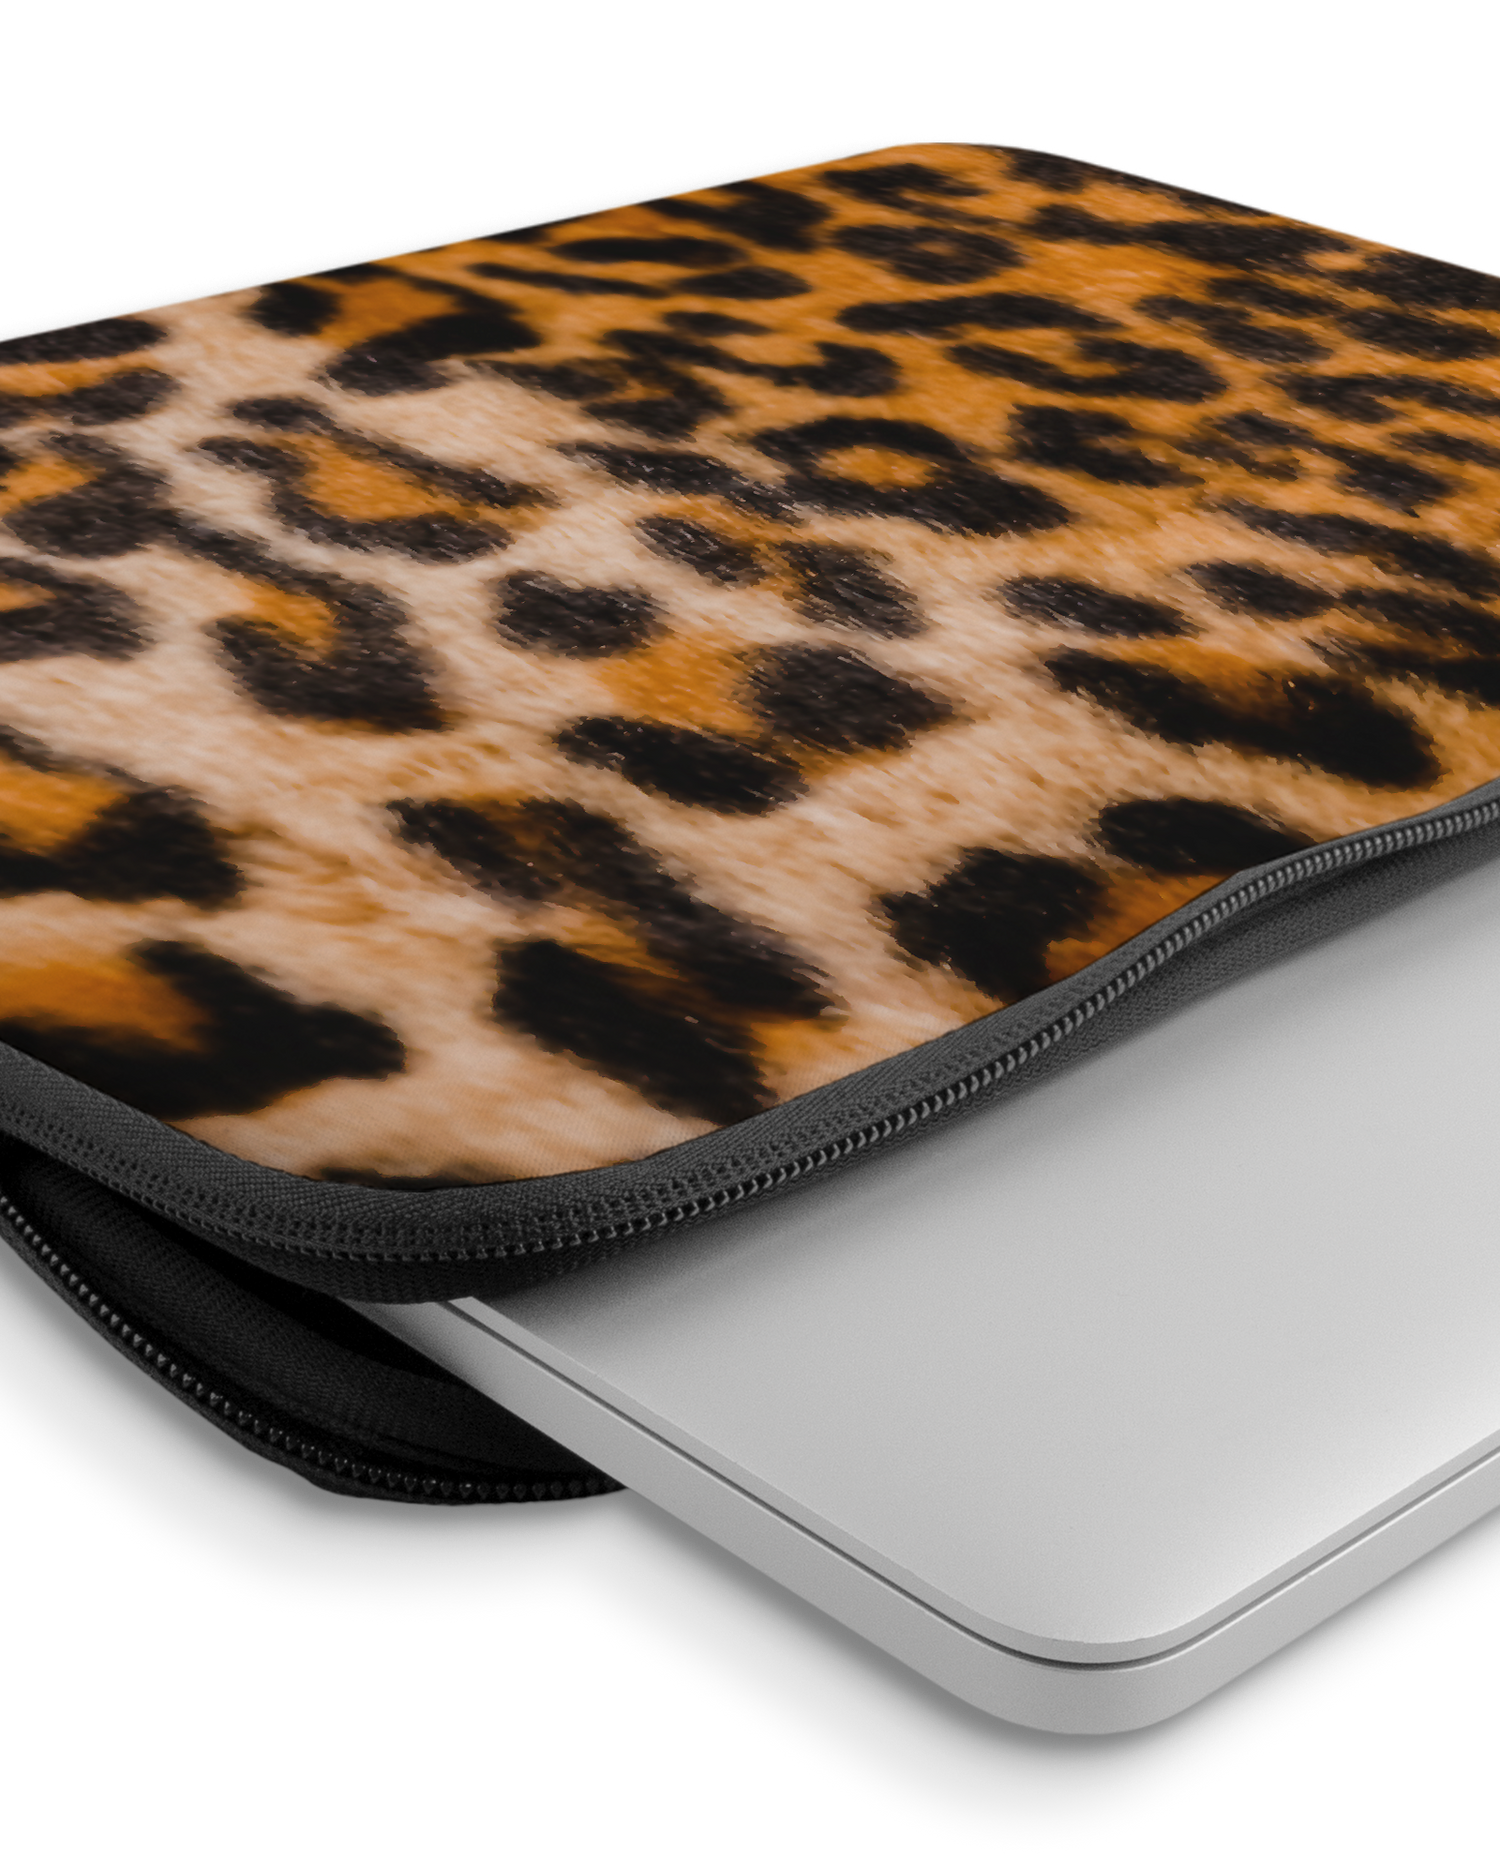 Leopard Pattern Laptophülle 14-15 Zoll mit Gerät im Inneren